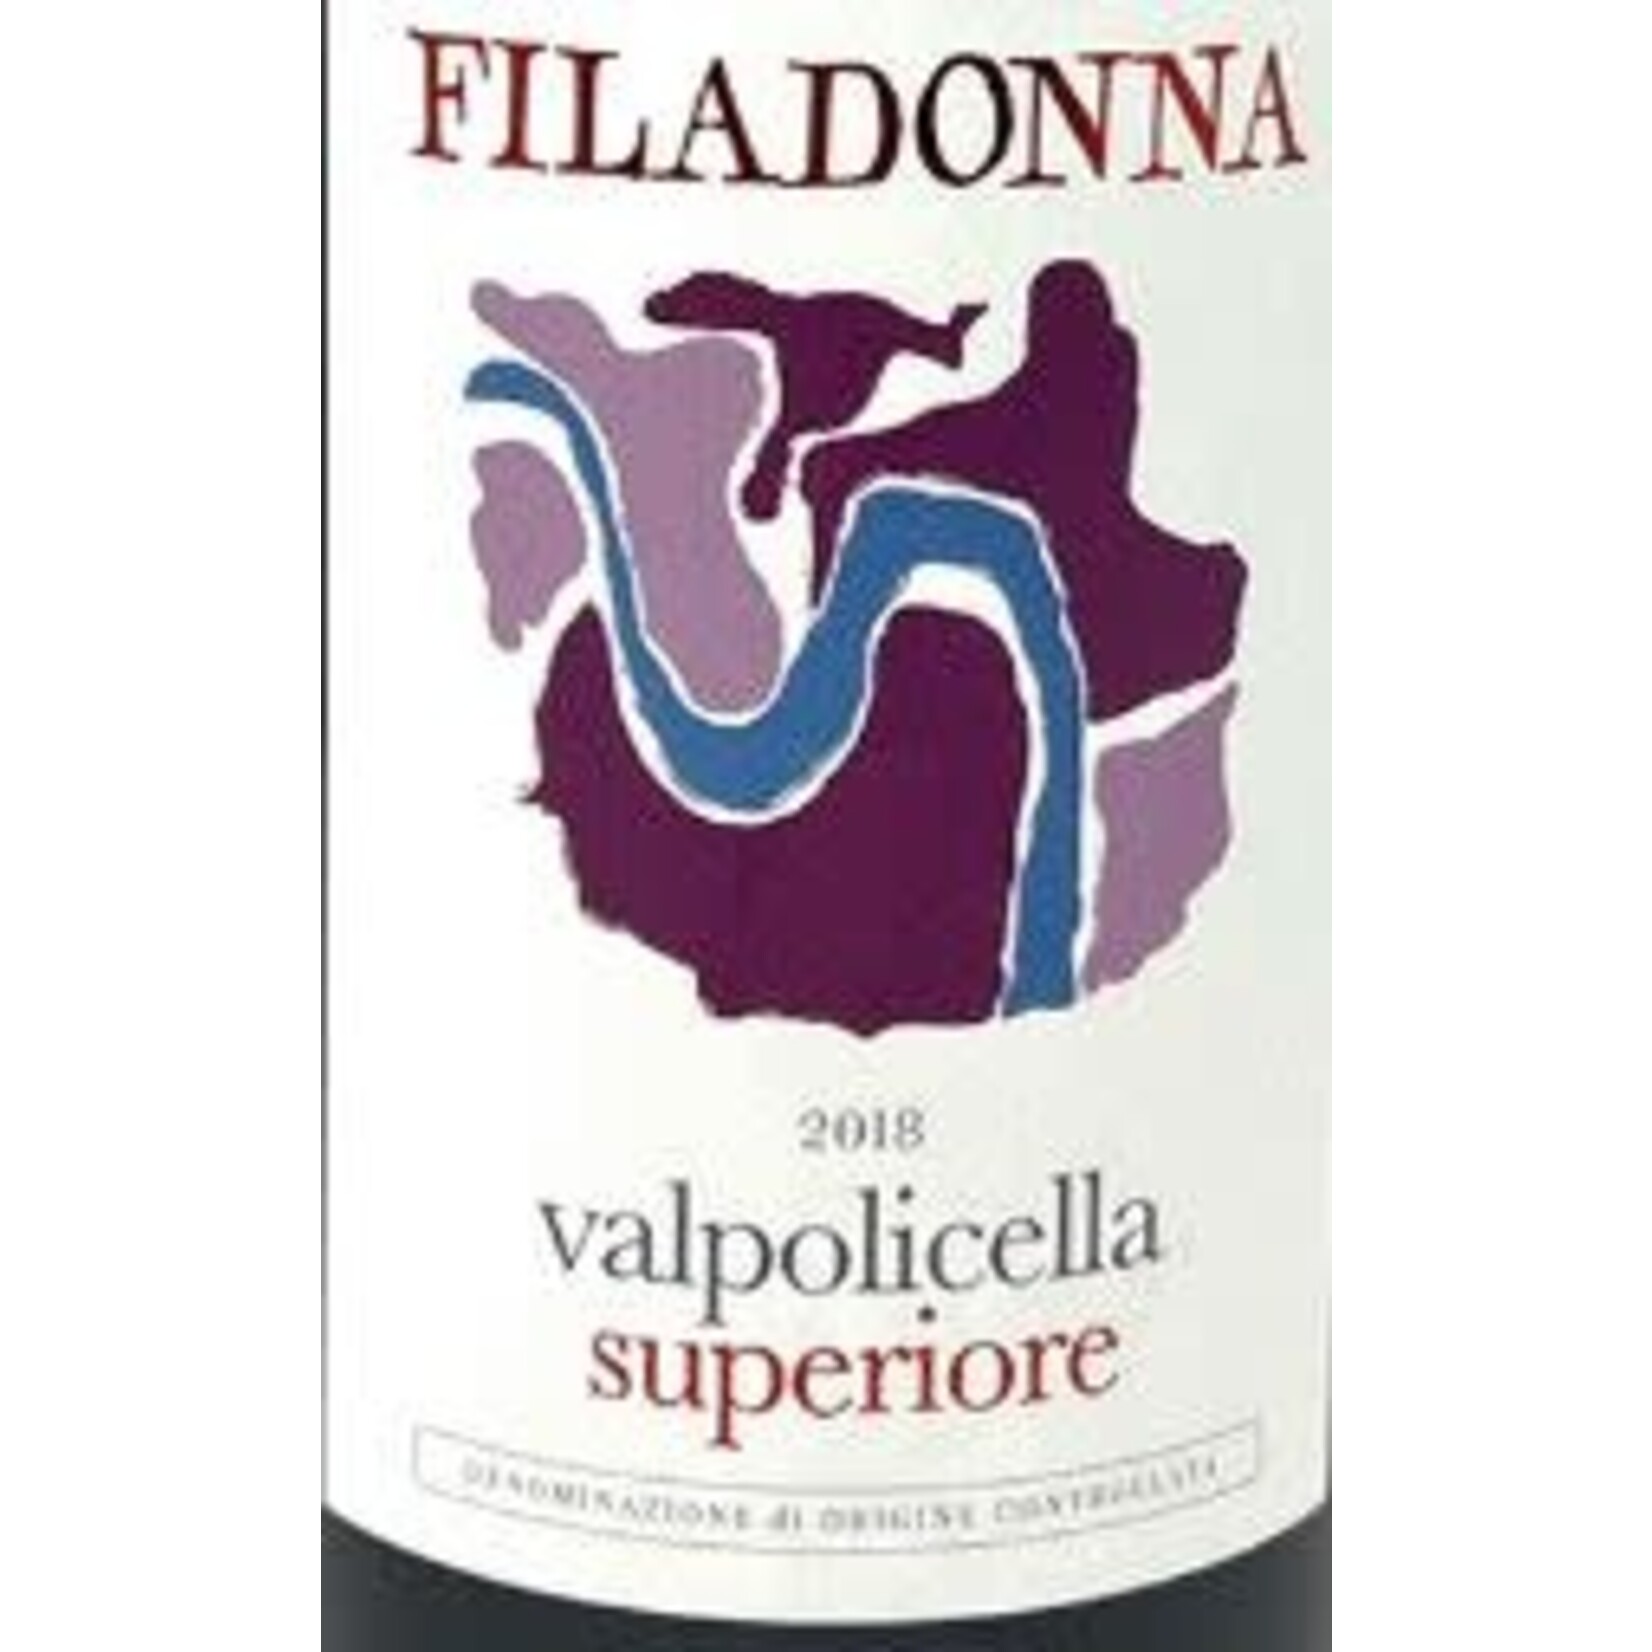 Filadonna Filadonna Valpolicella DOC Superiore 2019,  Italy